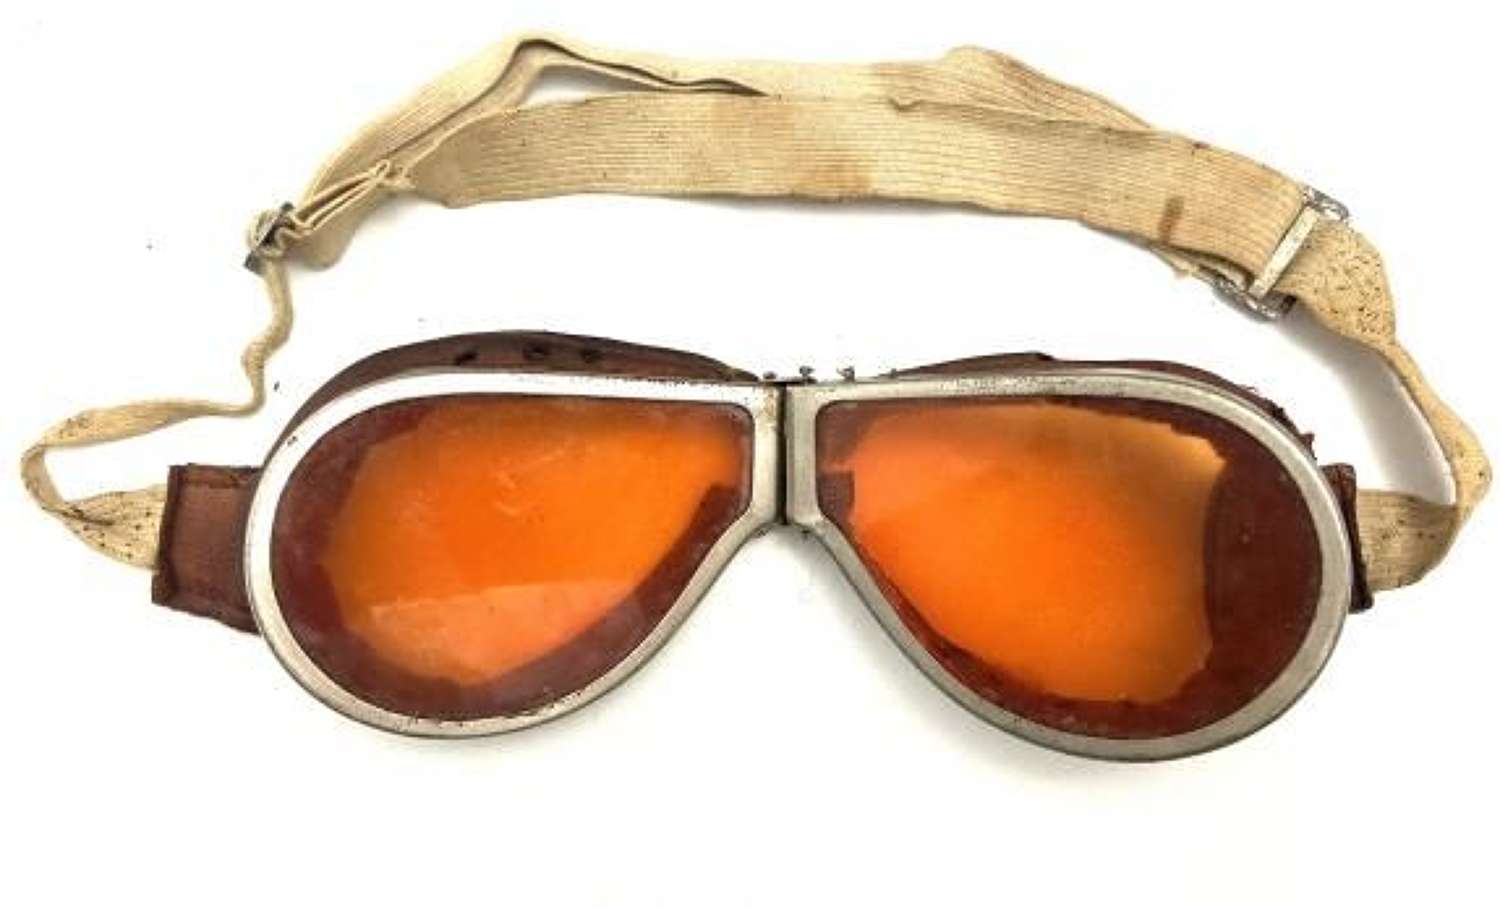 Original WW2 British MT Goggles with Tinted Lenses